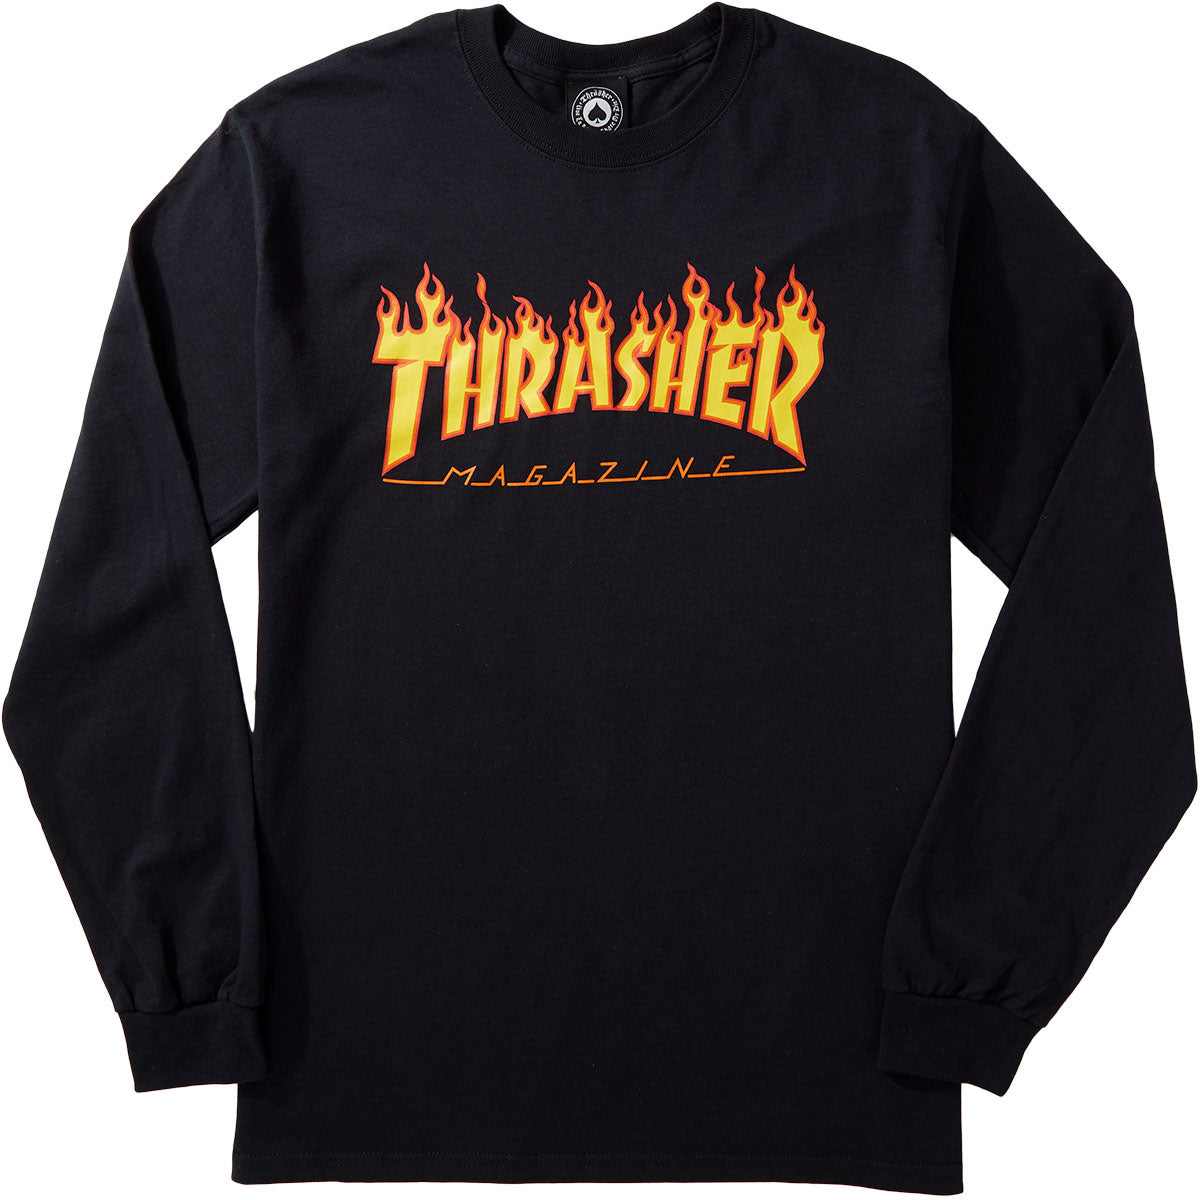 Thrasher Flame Long Sleeve T-Shirt - Black image 1